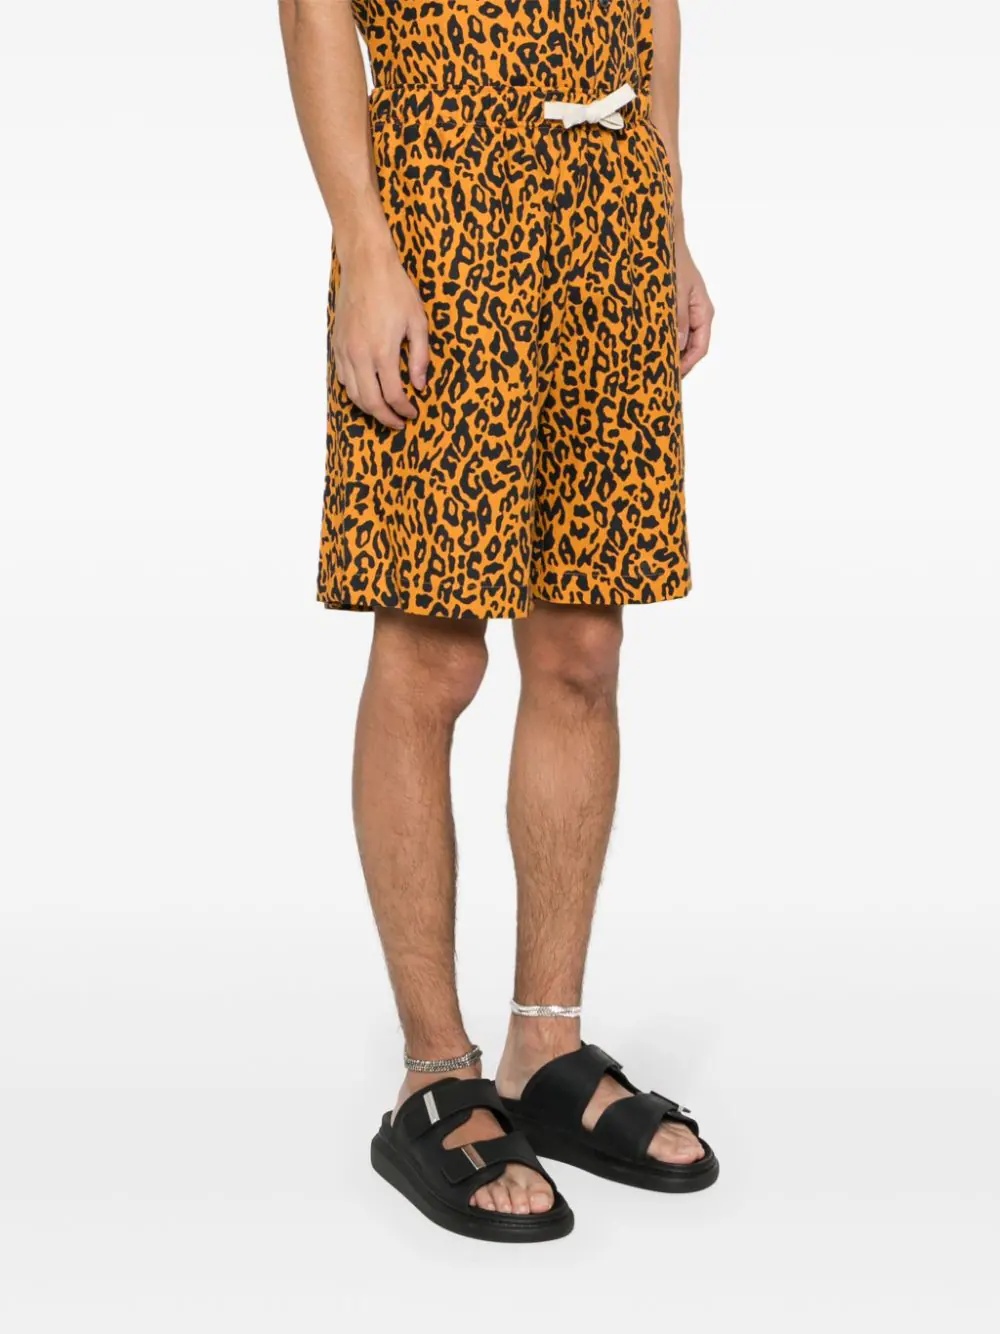 Cheetah Shorts - 3